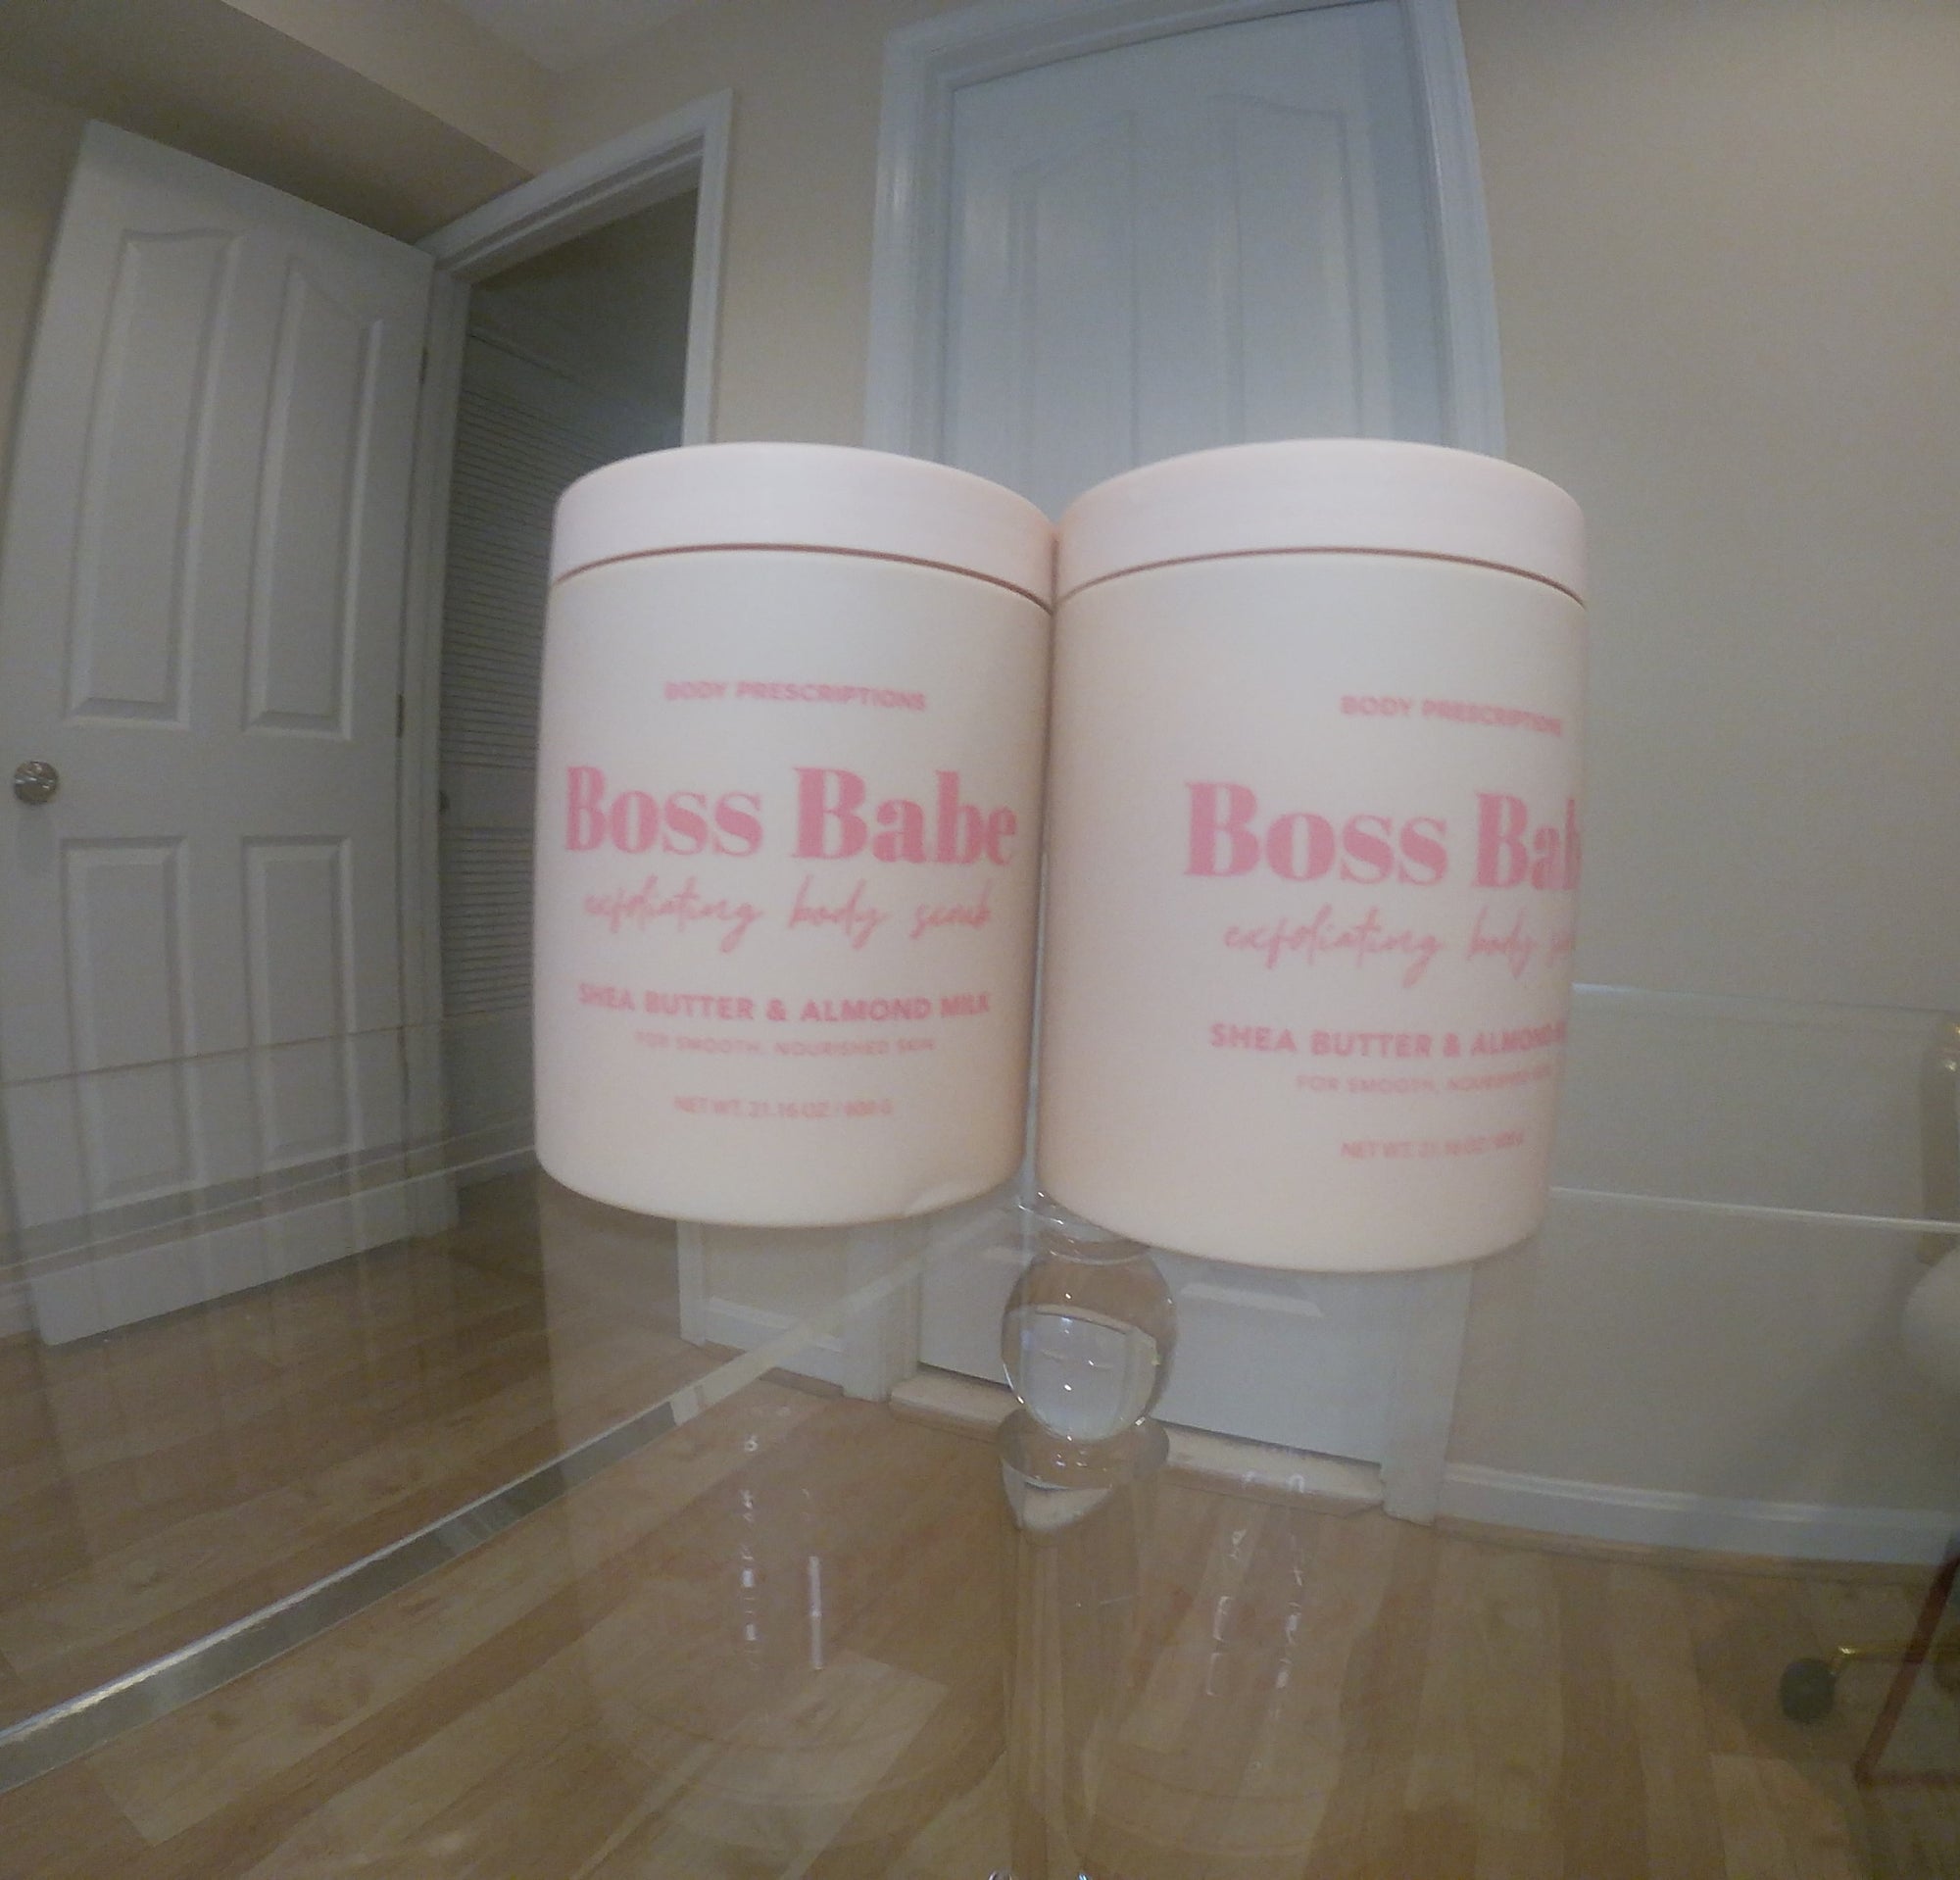 Boss Babe Shea Butter & Almond Milk Exfoliating Body Scrub